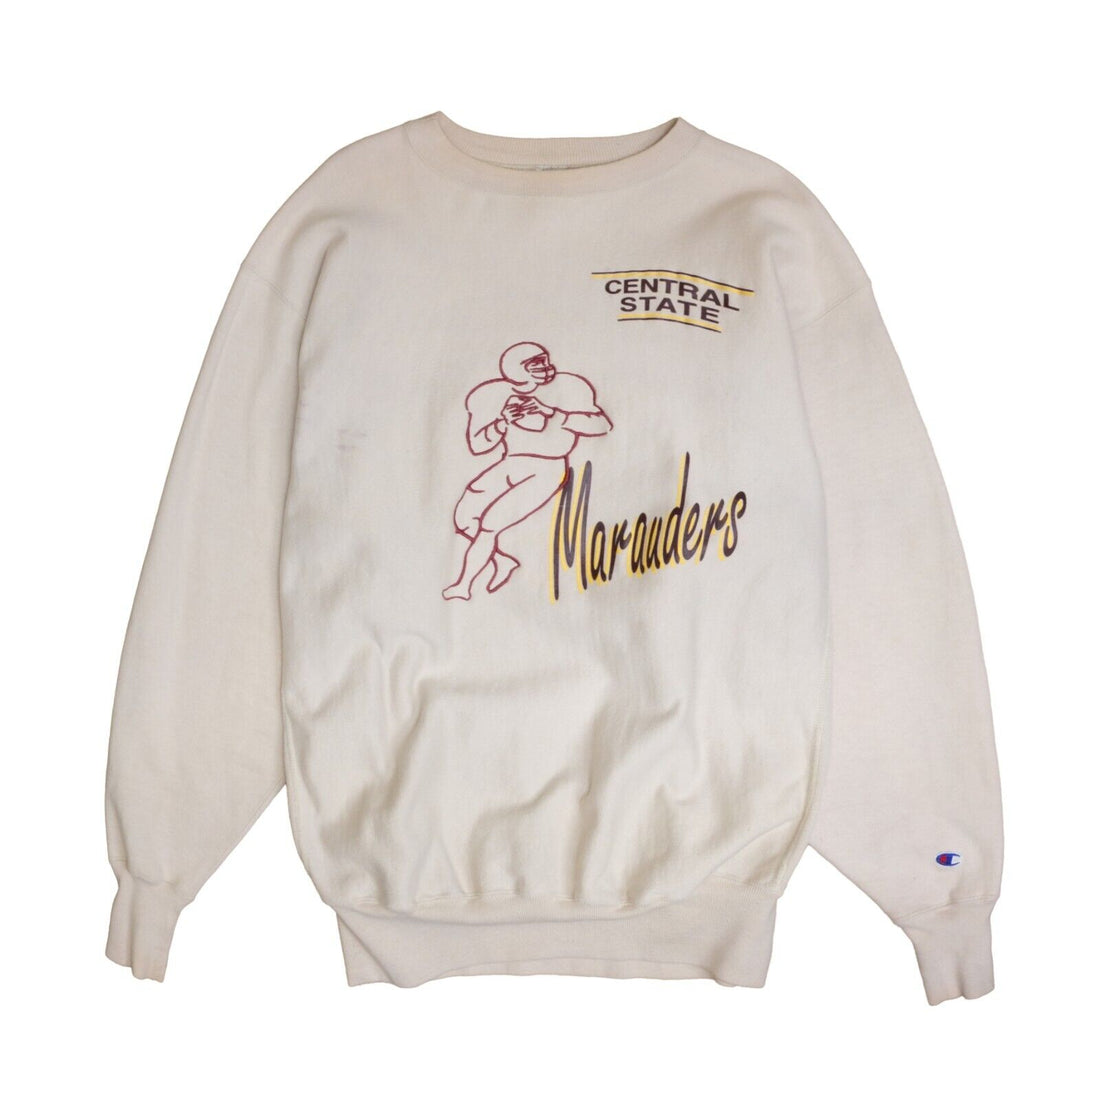 Vintage Central State Marauders Champion Reverse Weave Sweatshirt 2XL NCAA 90s